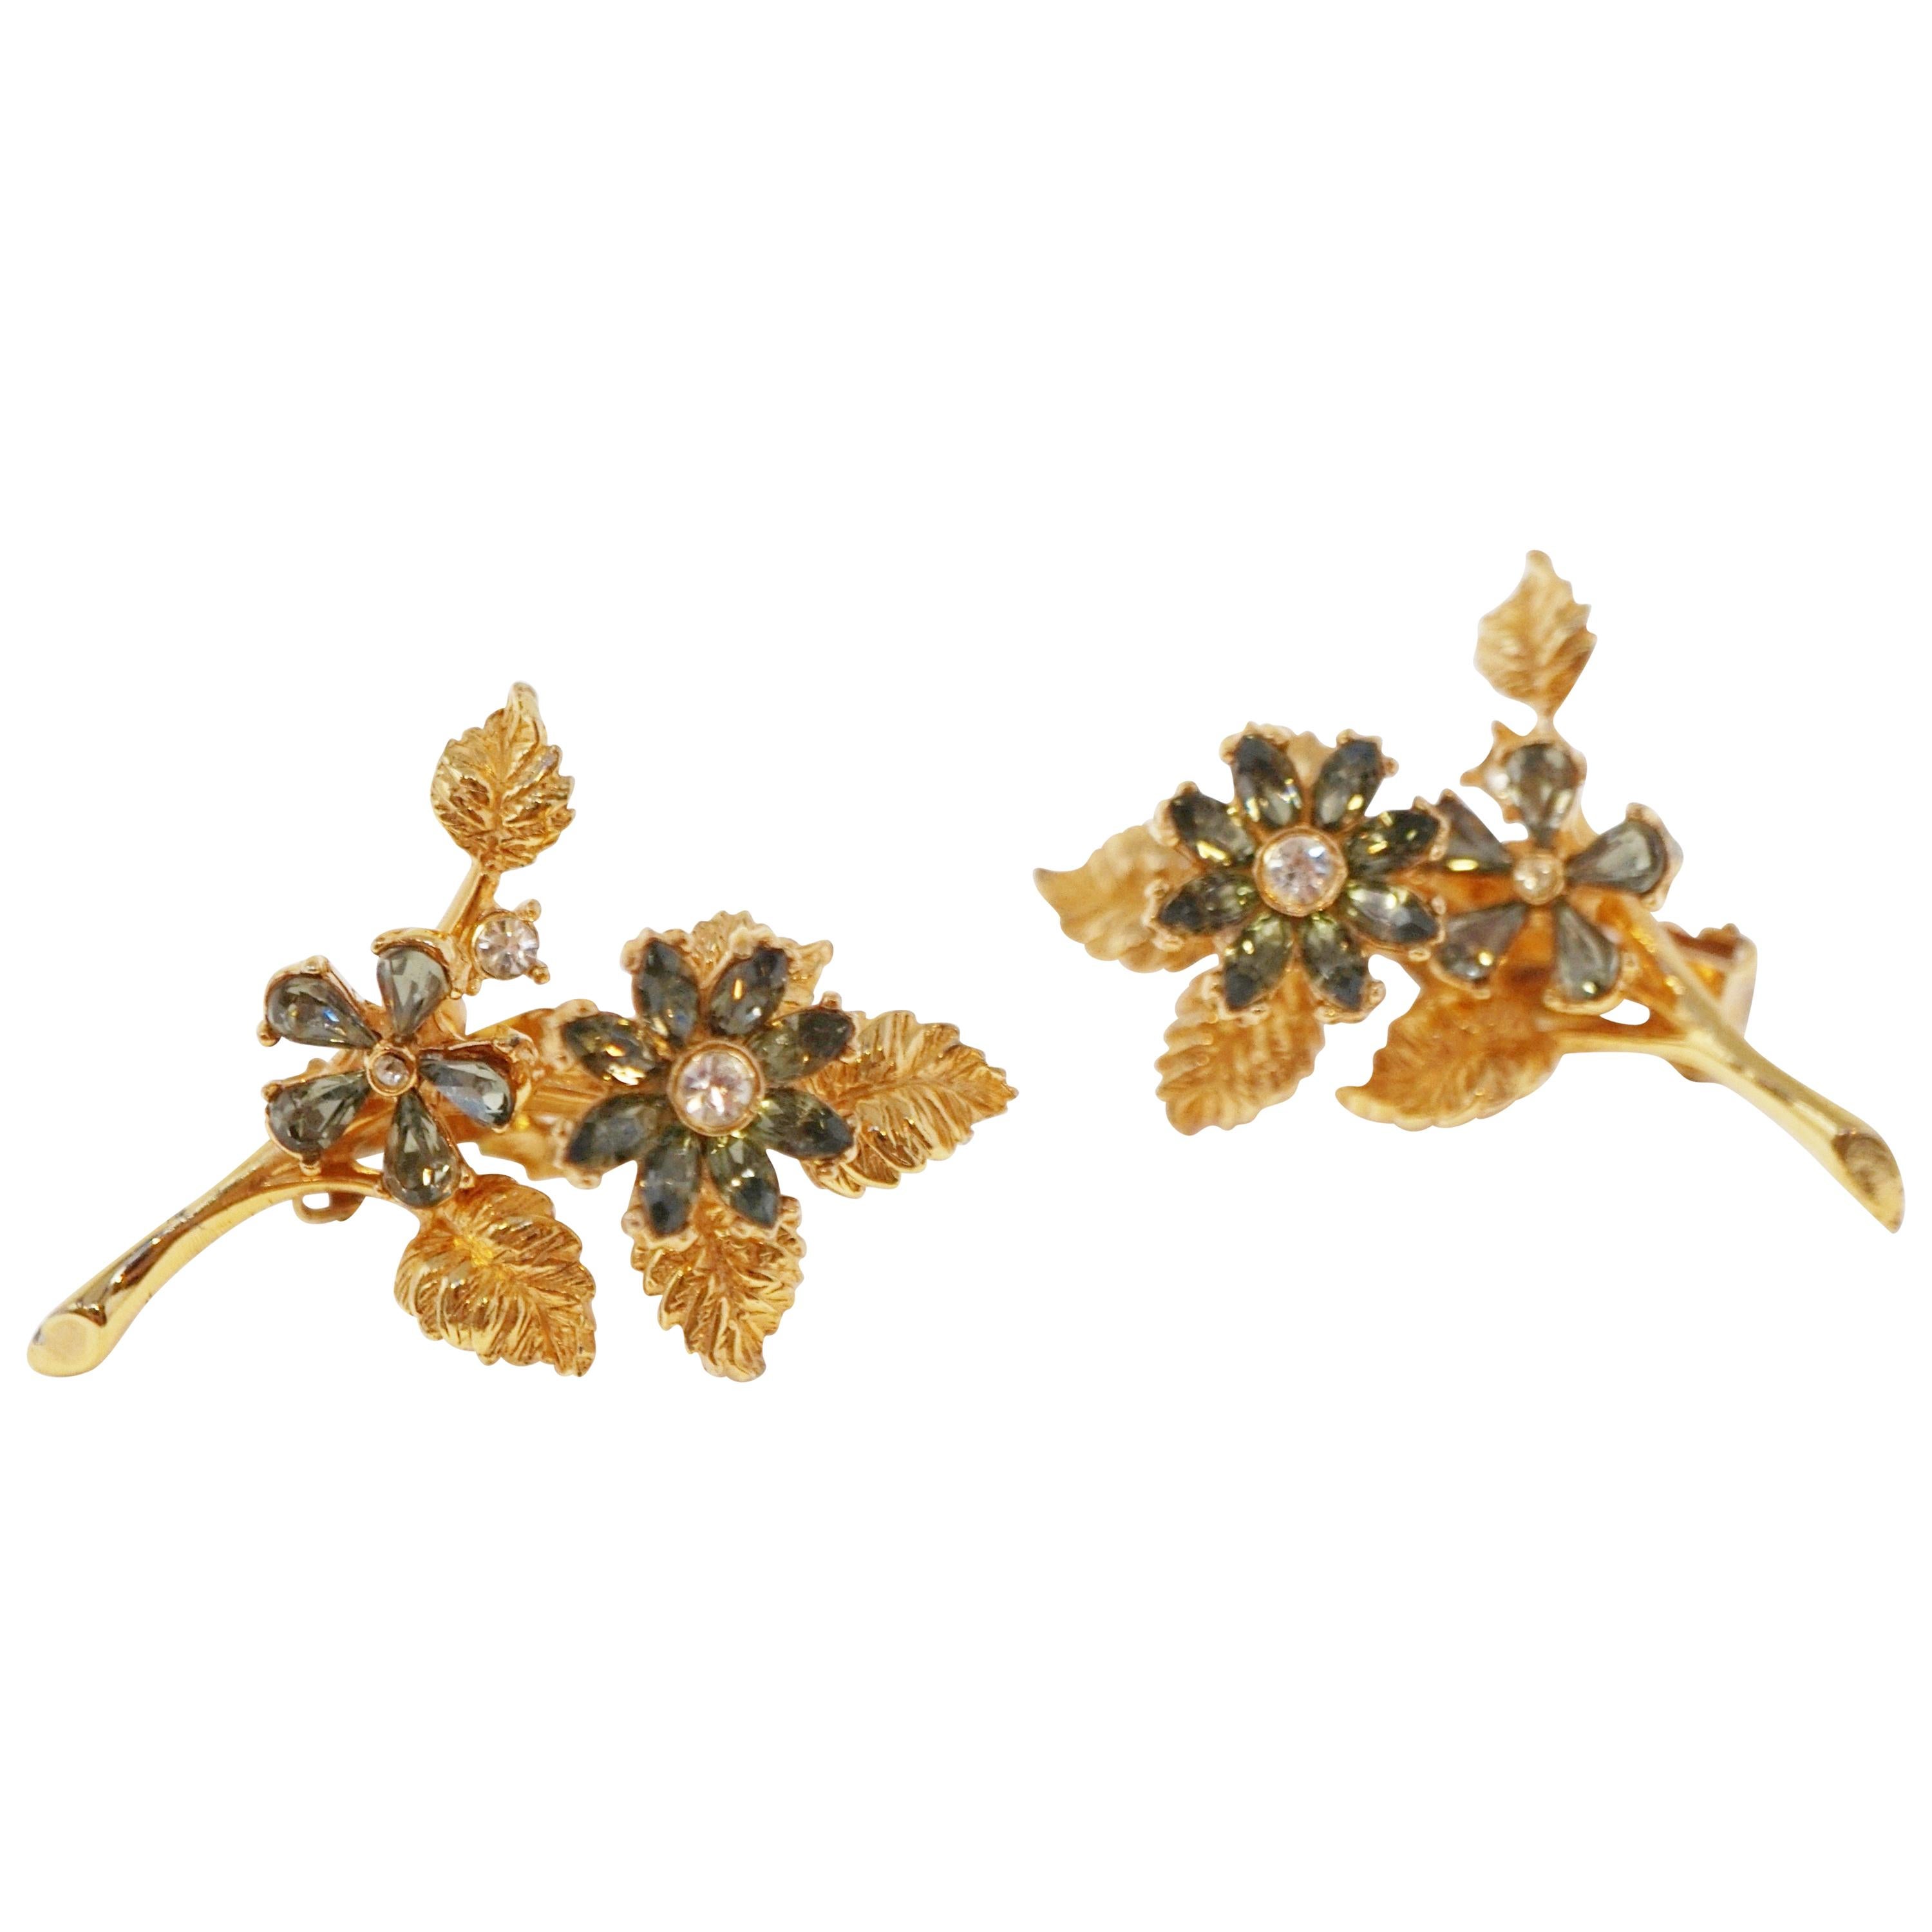 Hattie Carnegie Gilt & Rhinestone Floral Trembler Earrings, Signed, circa 1940s